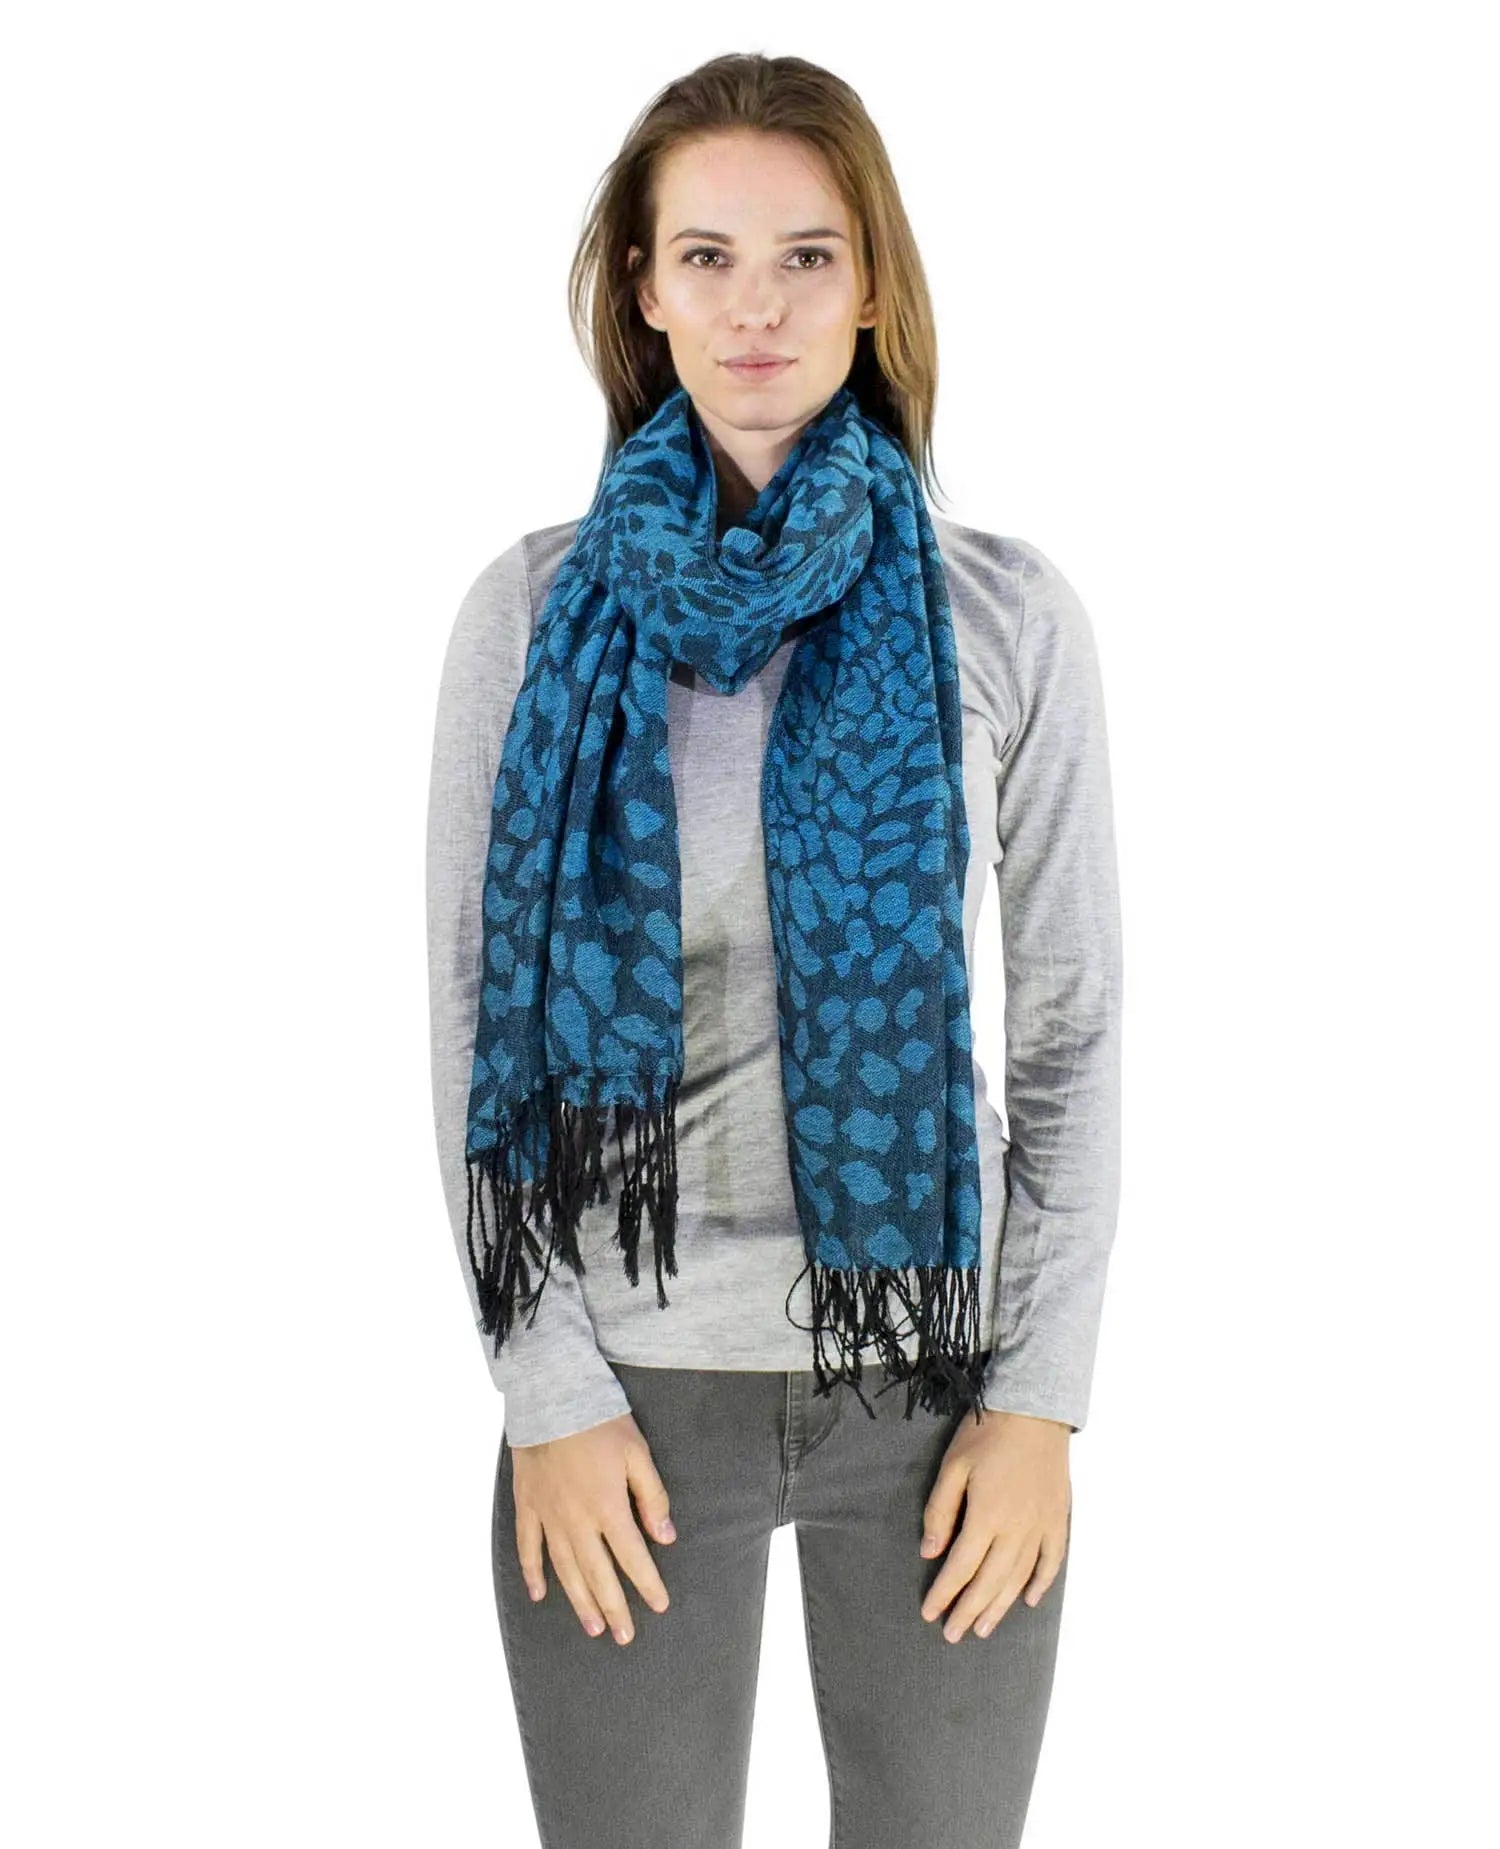 Woman wearing blue leopard print pashmina scarf